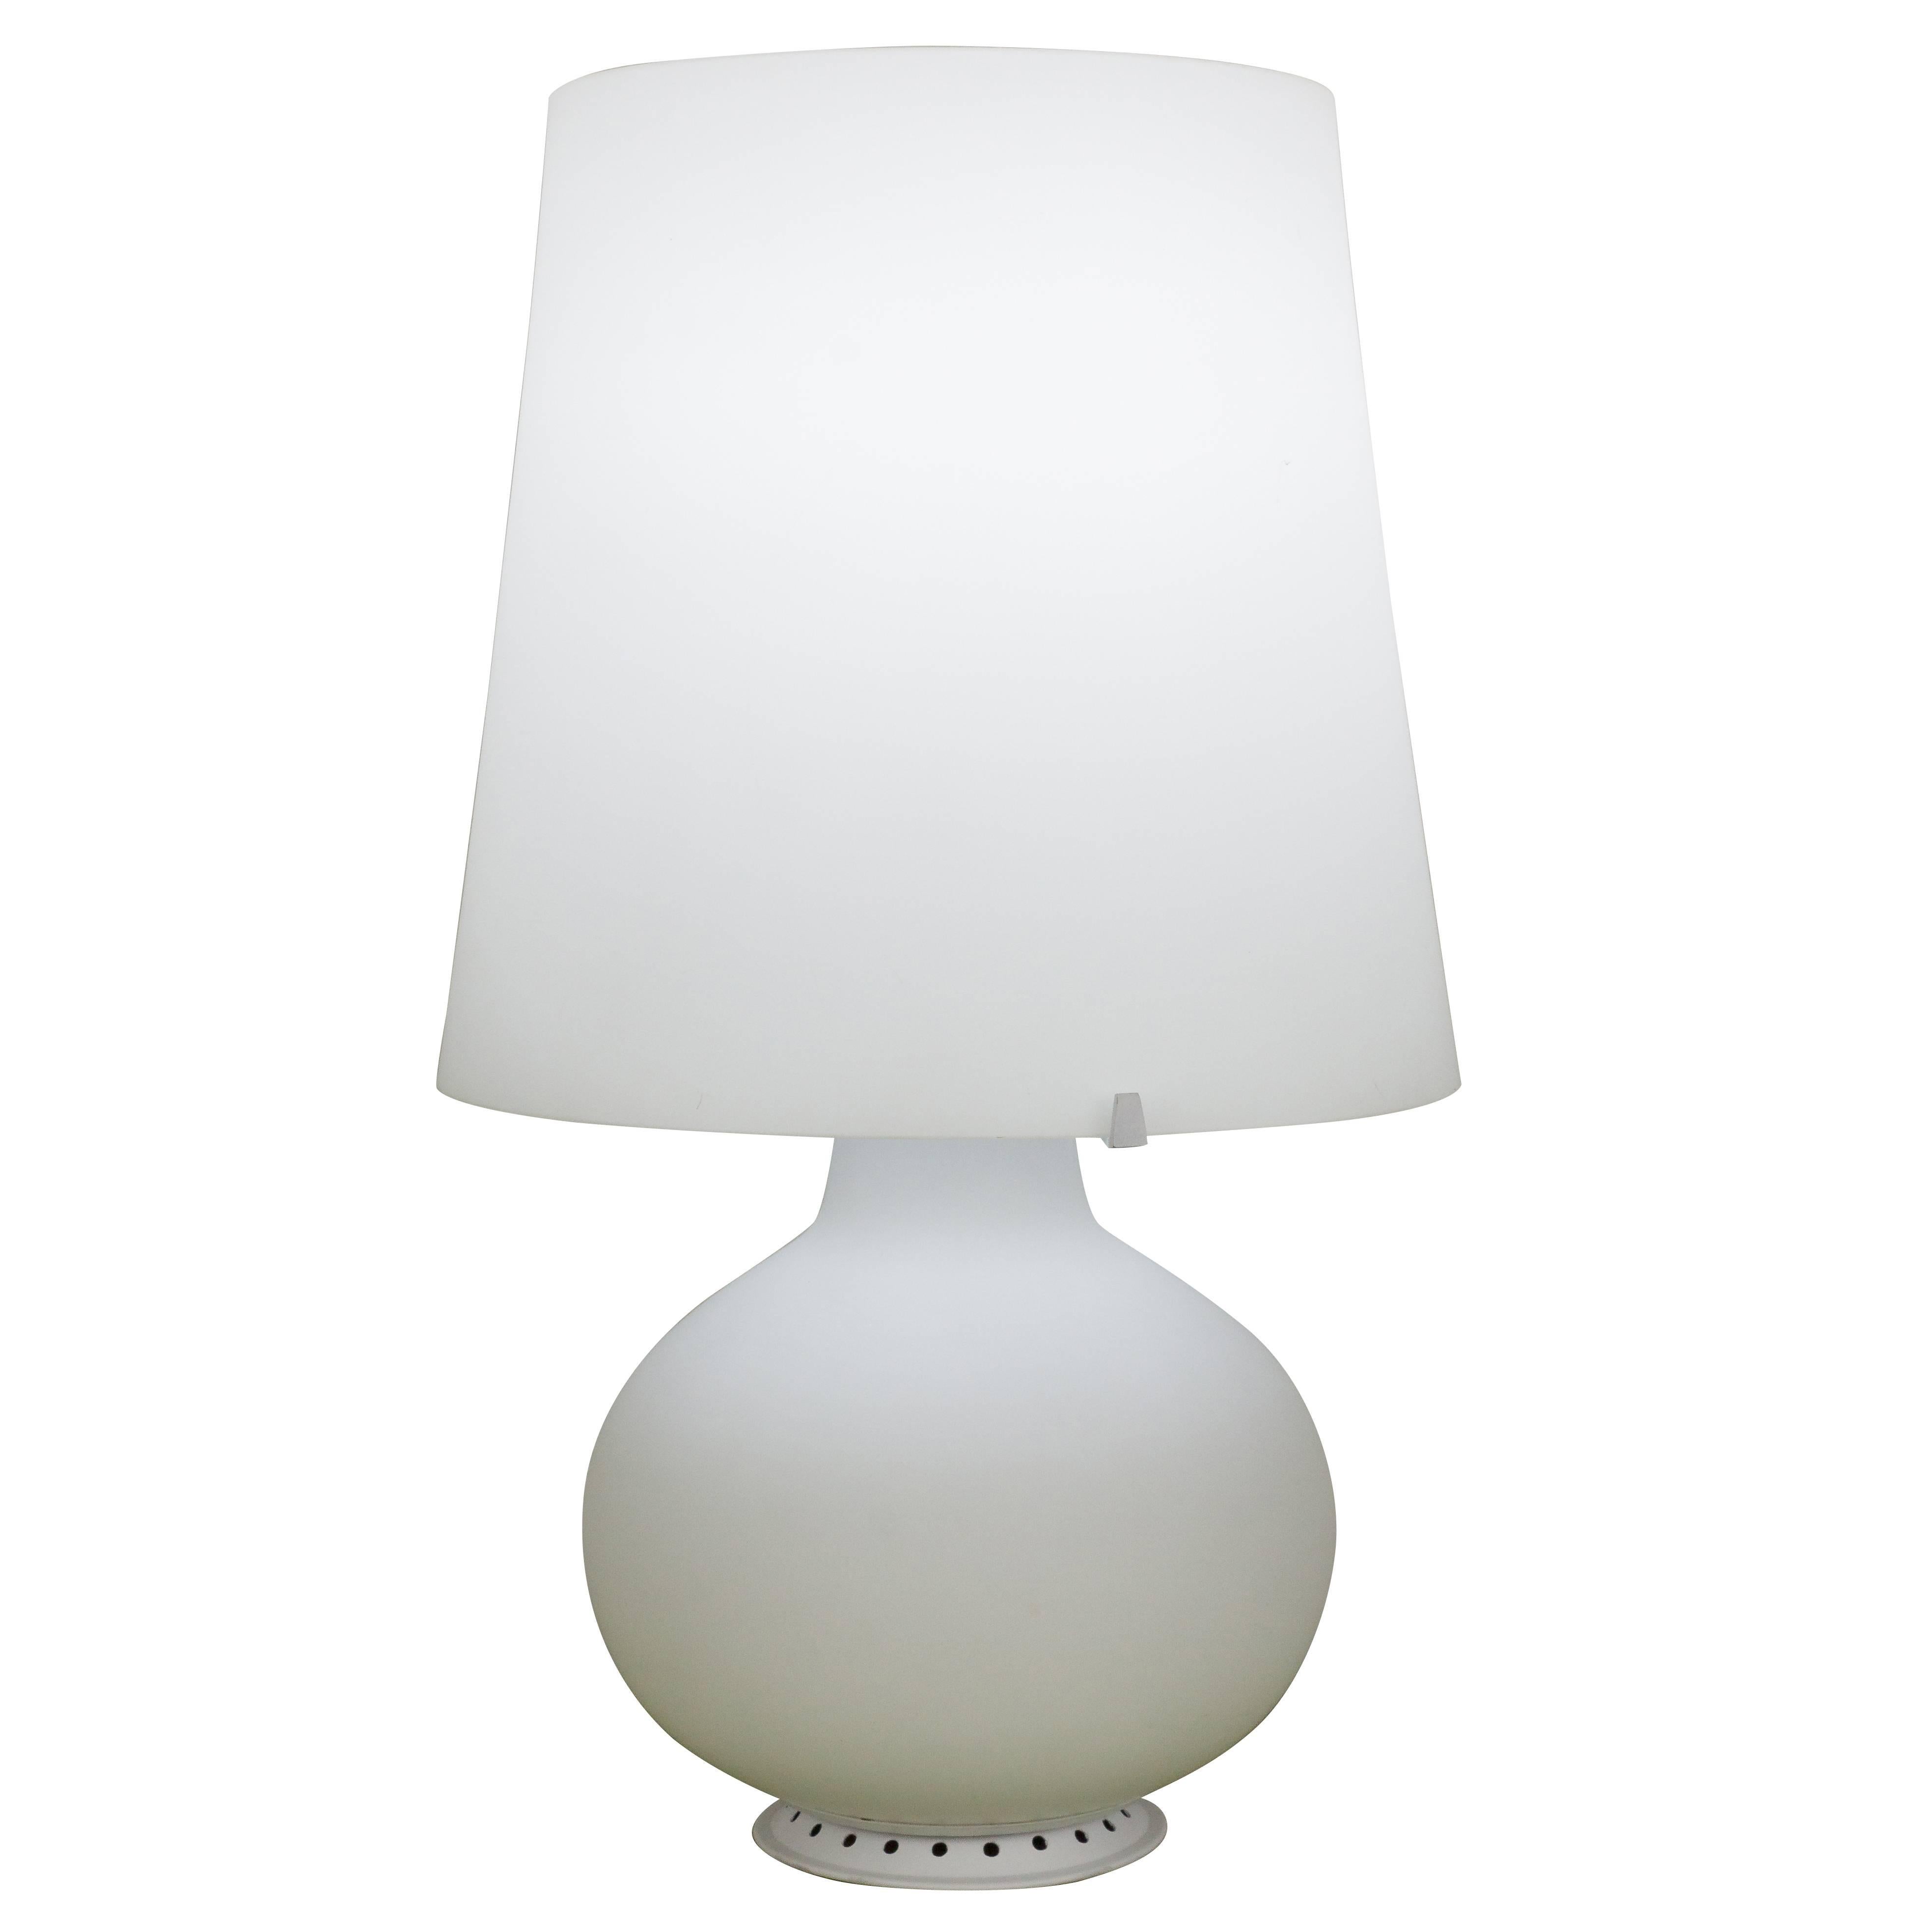 Italian 1960s Fontana Arte White Glass Lamp by Max Ingrand For Sale